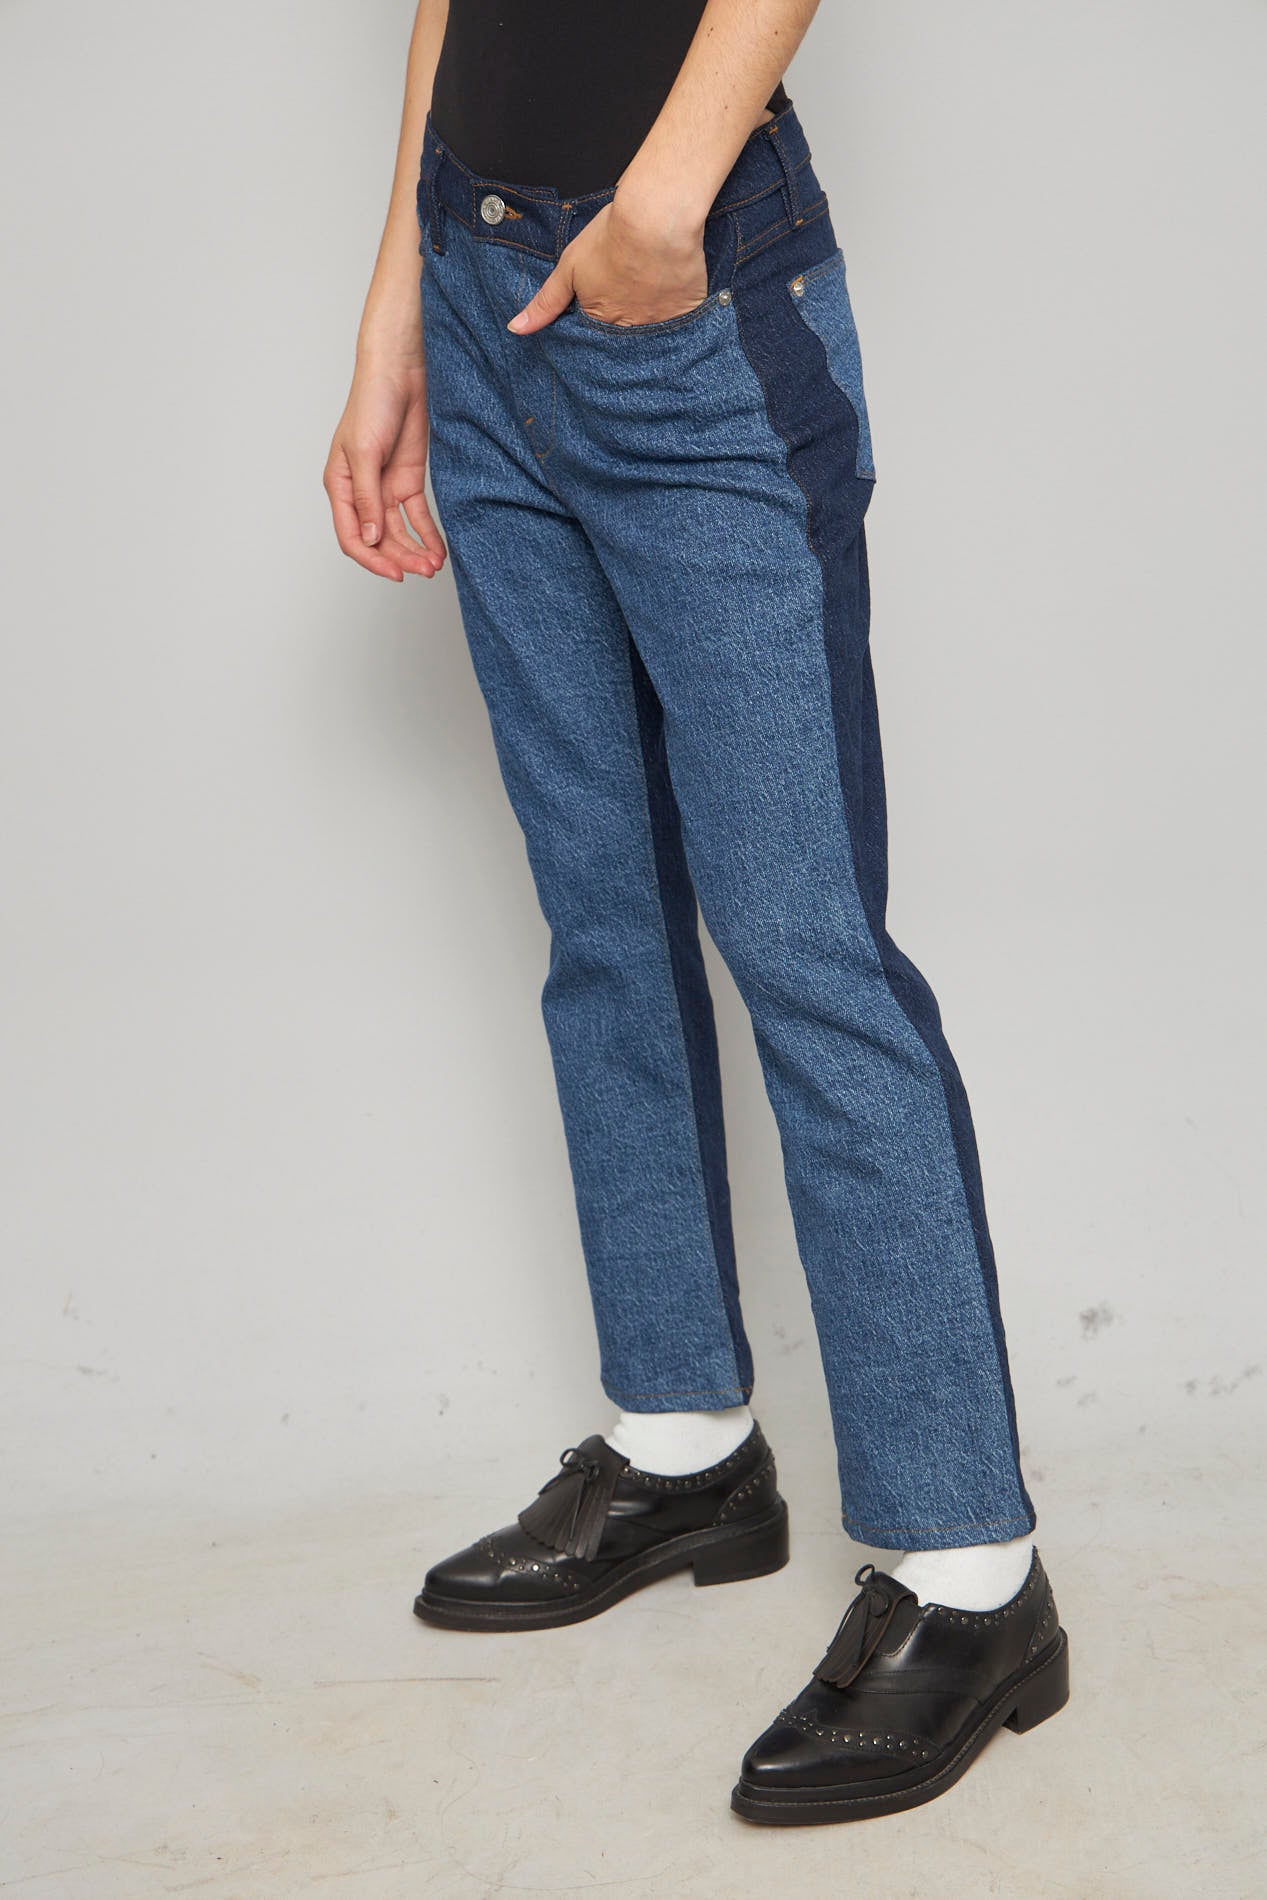 Jeans casual  azul frame  talla M 545